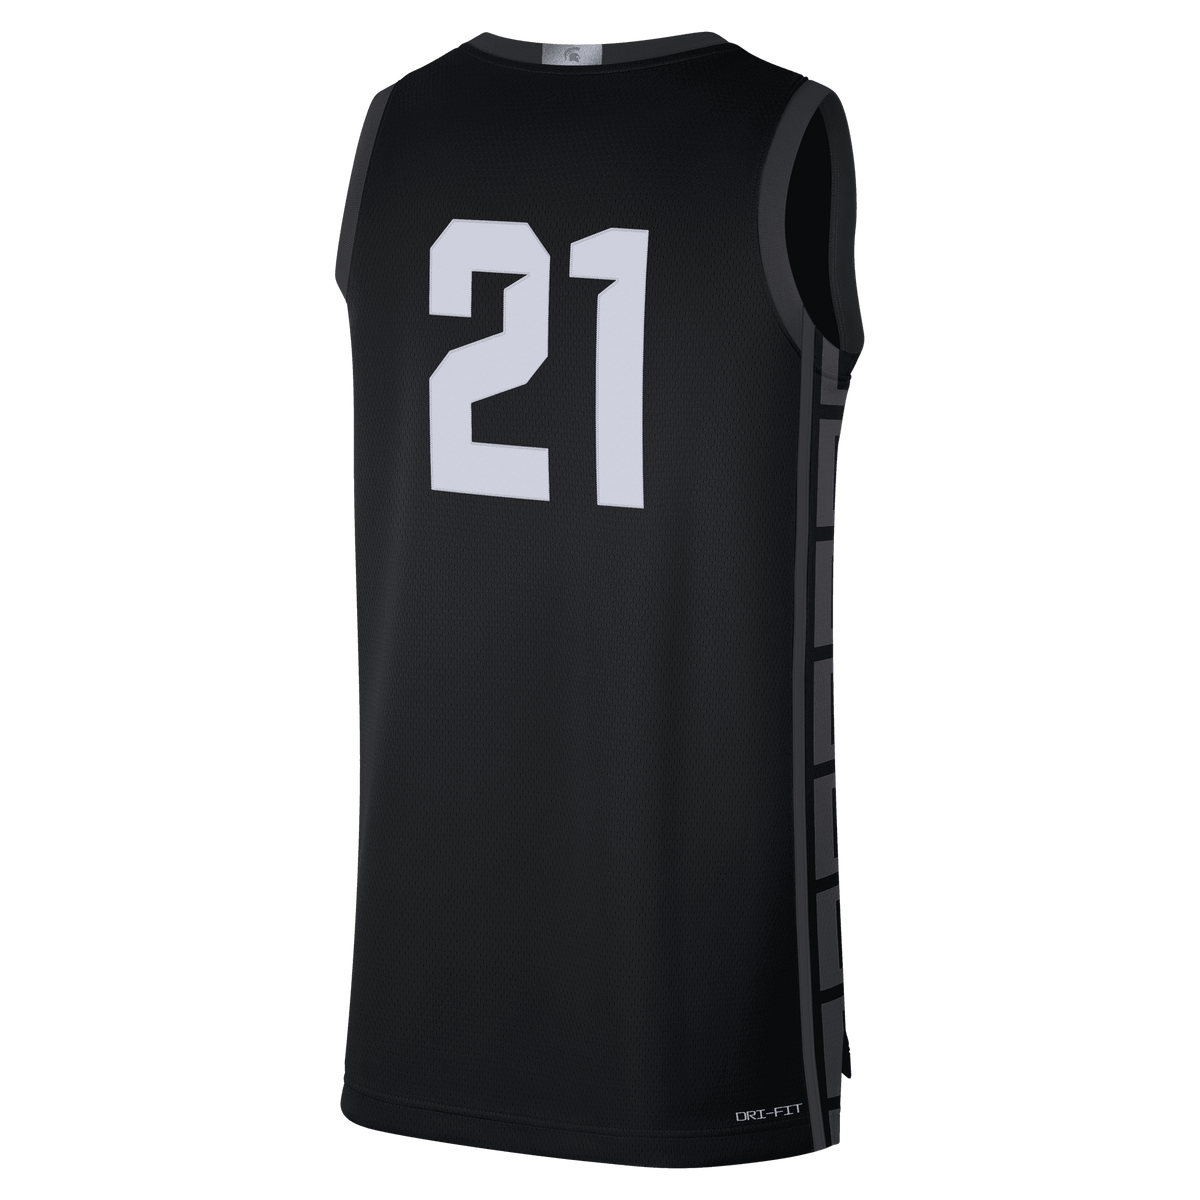 Nike Youth Basketball Jersey – Spartan Spirit Shop